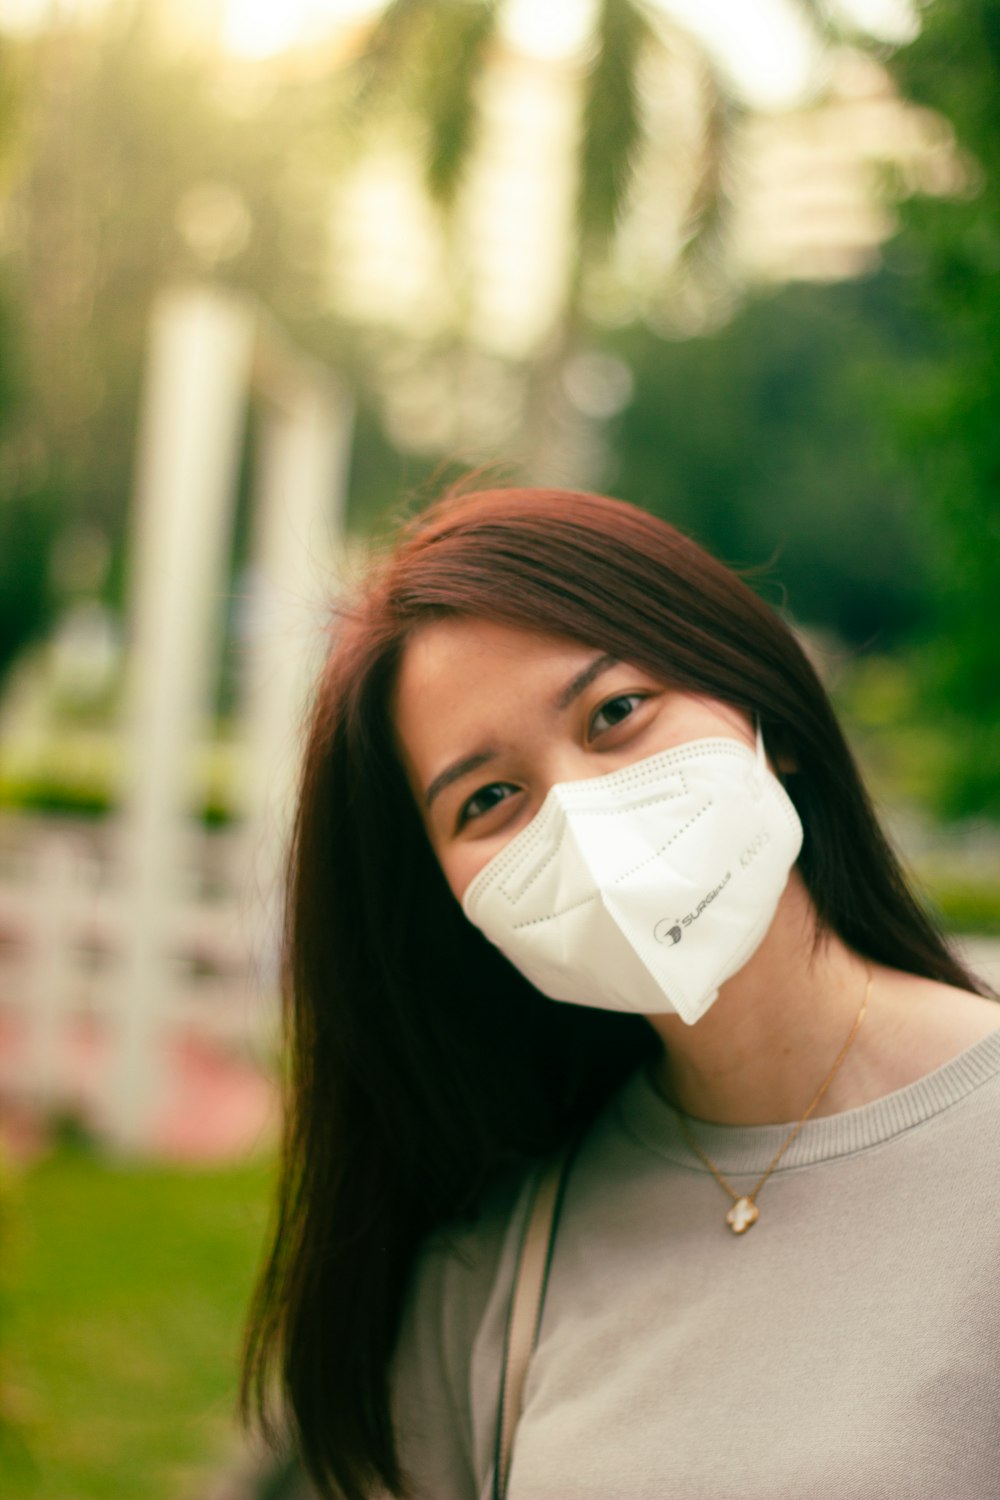 Una donna che indossa una maschera facciale in un parco